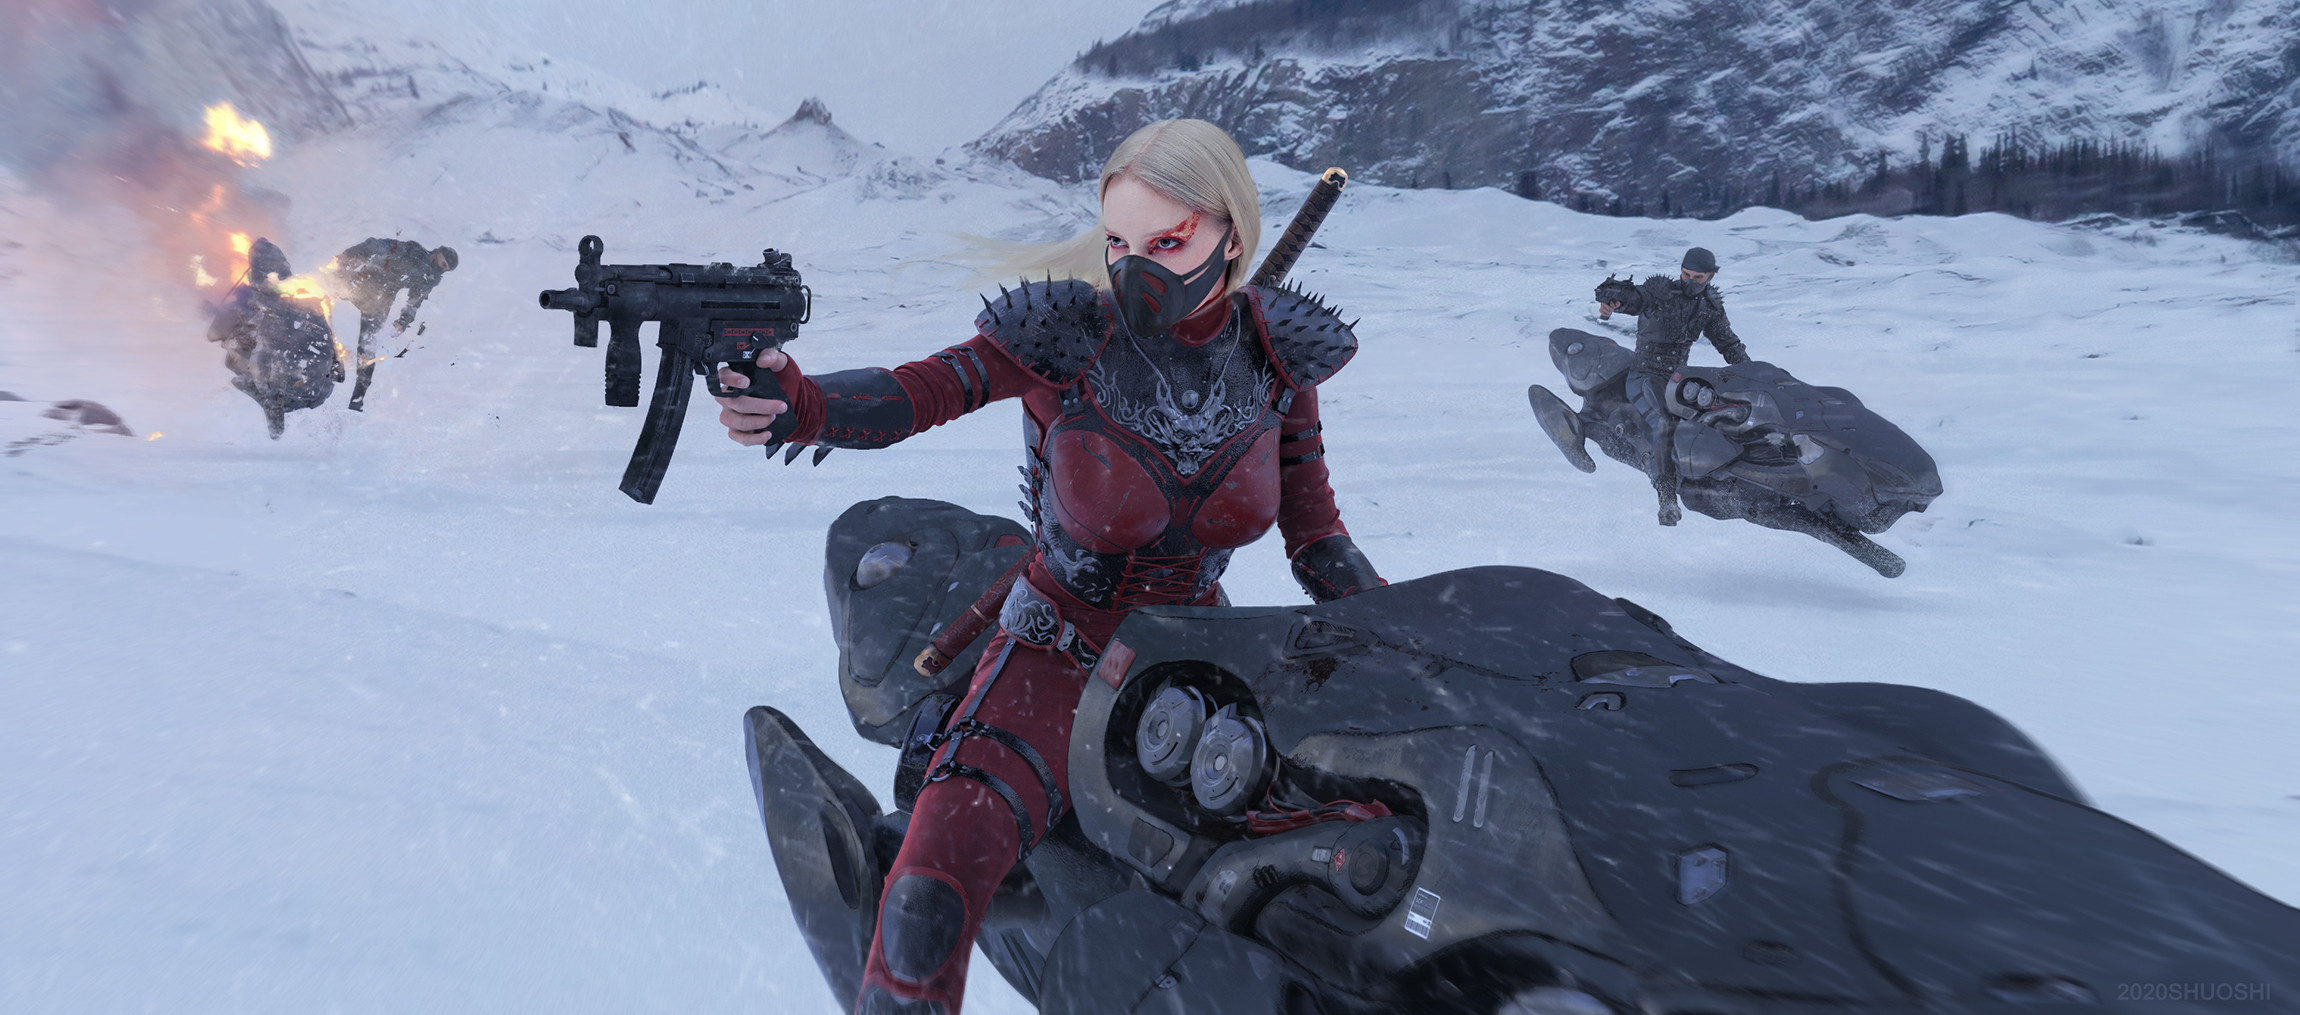 General 2300x1015 science fiction artwork women vehicle weapon girls with guns blonde machine gun